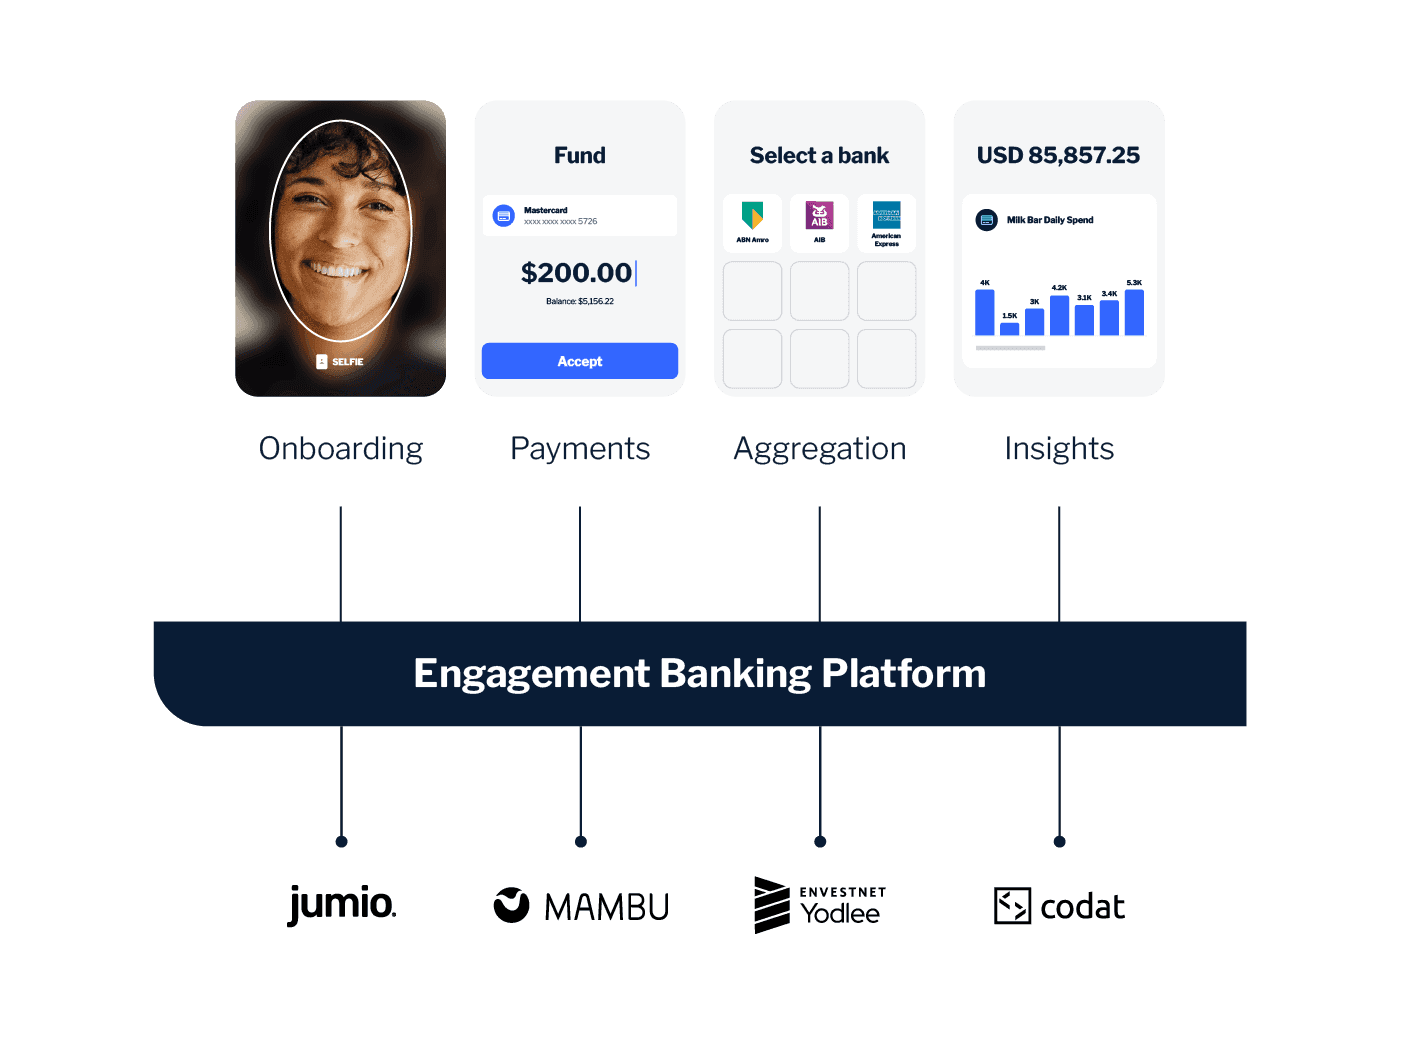 Digital banking open to fintechs